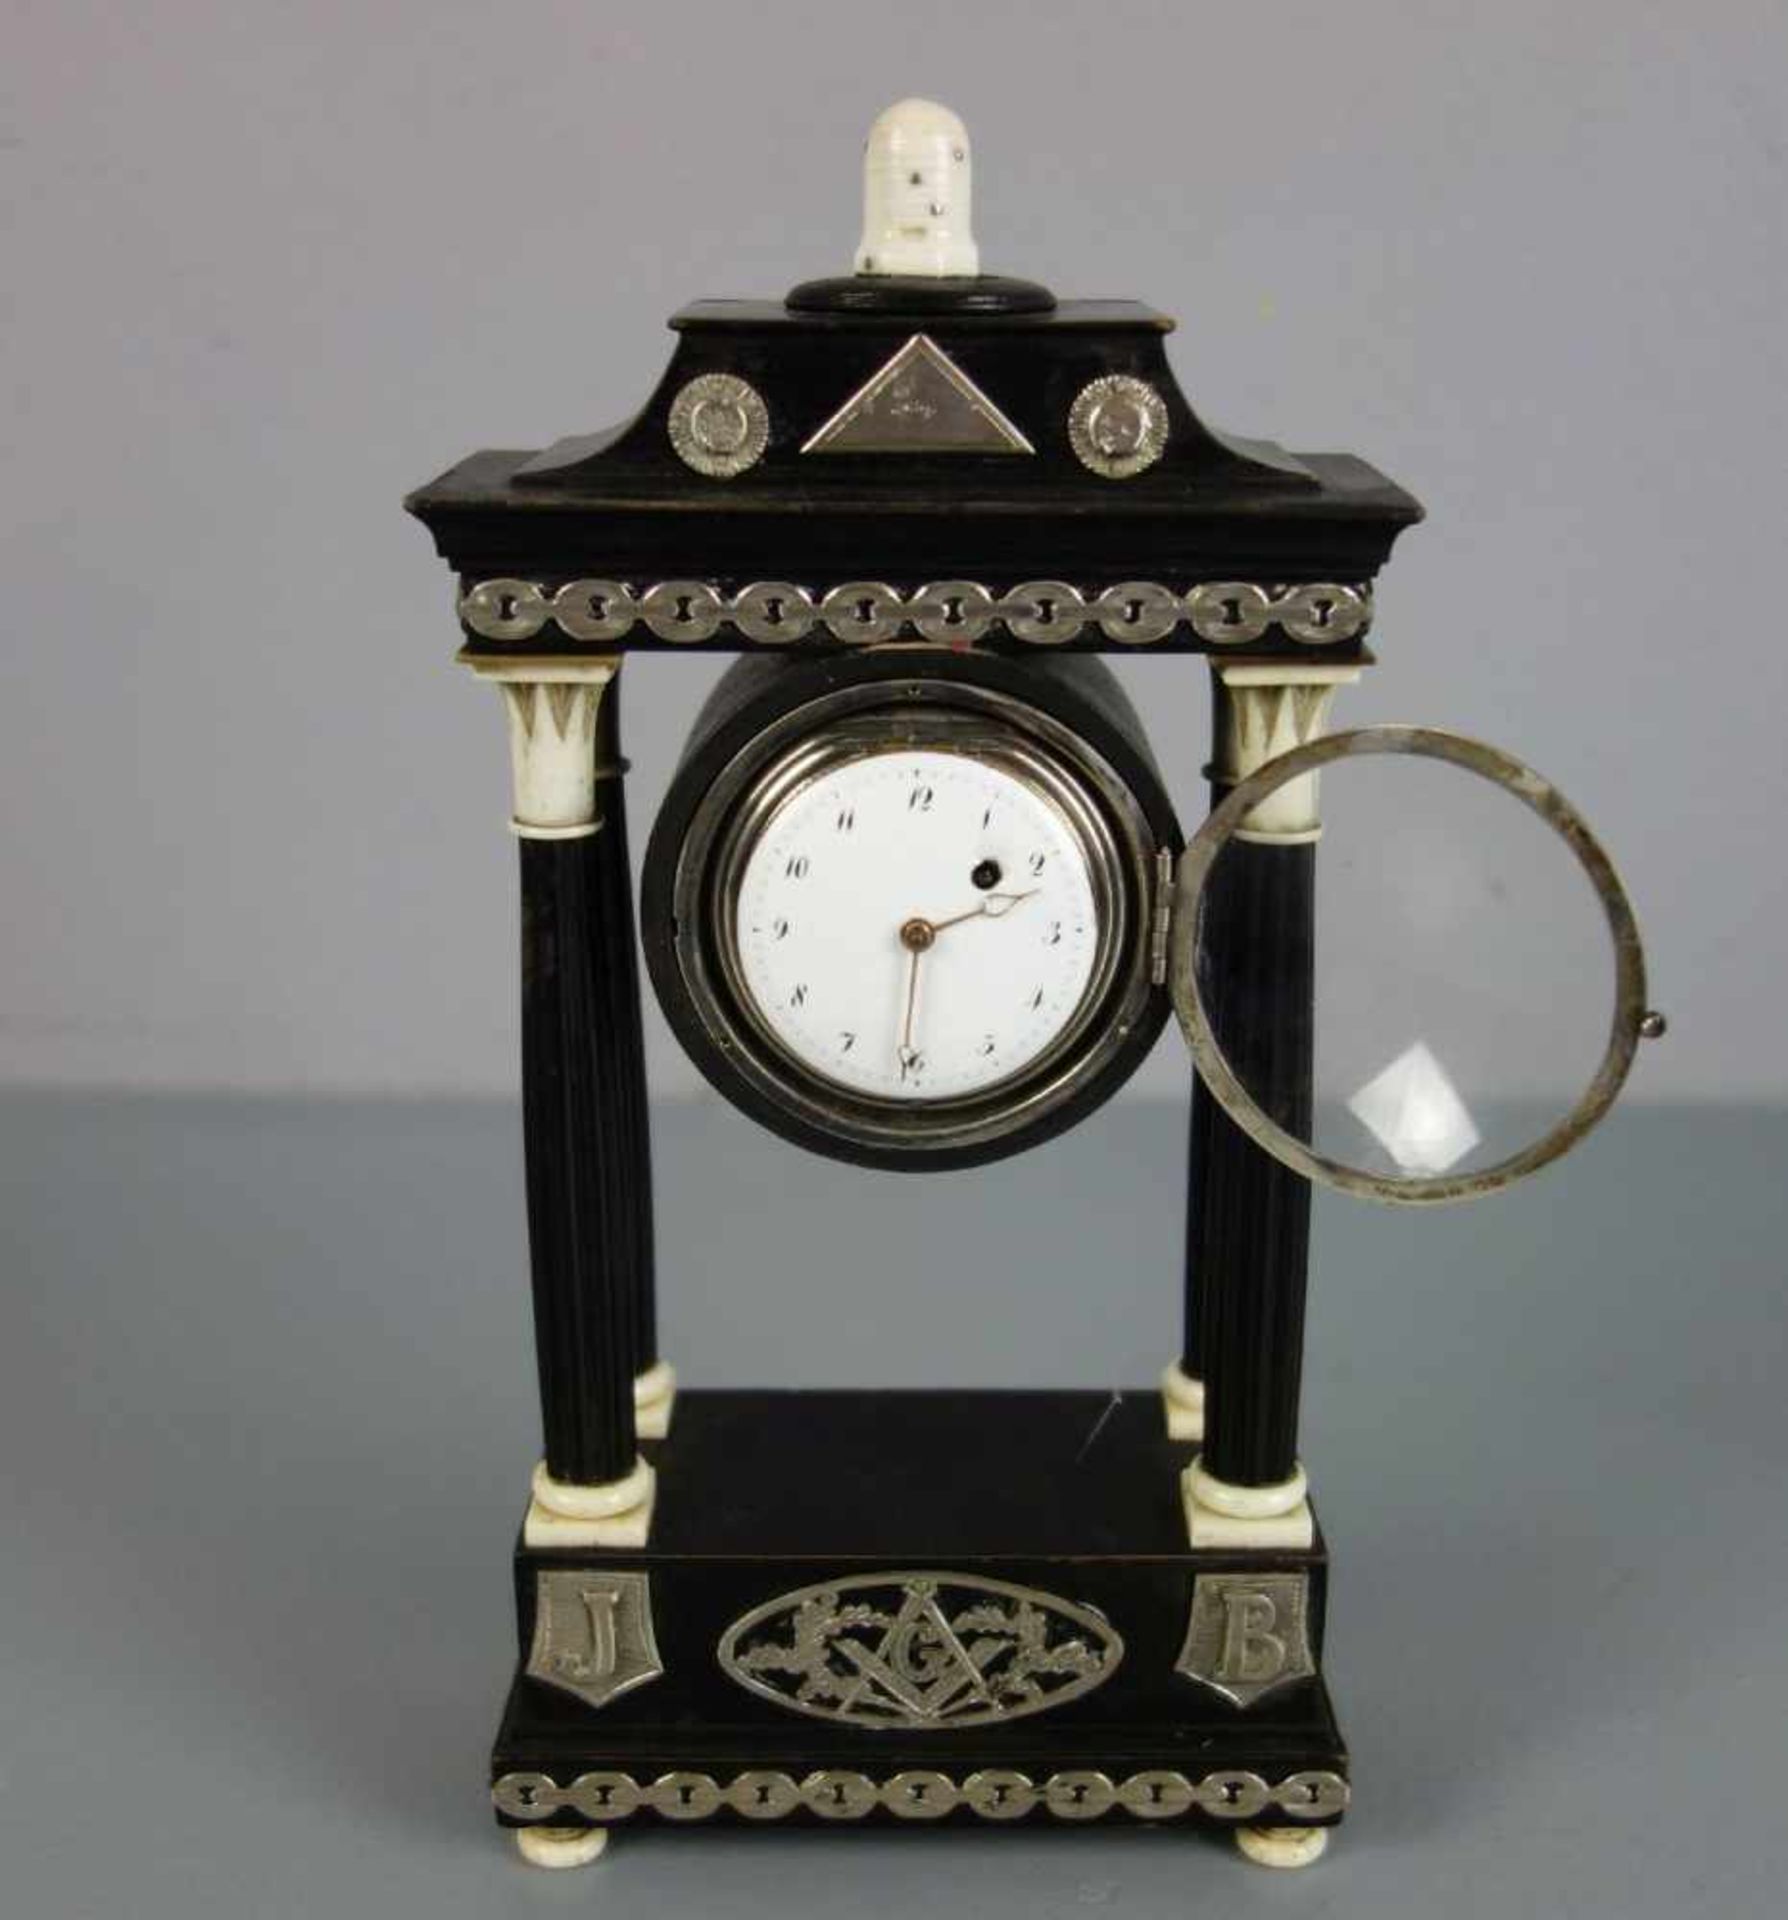 FREIMAUER SÄULENUHR / PORTALUHR / masonic table clock, wohl 1. H. 19. Jh., Frankreich.